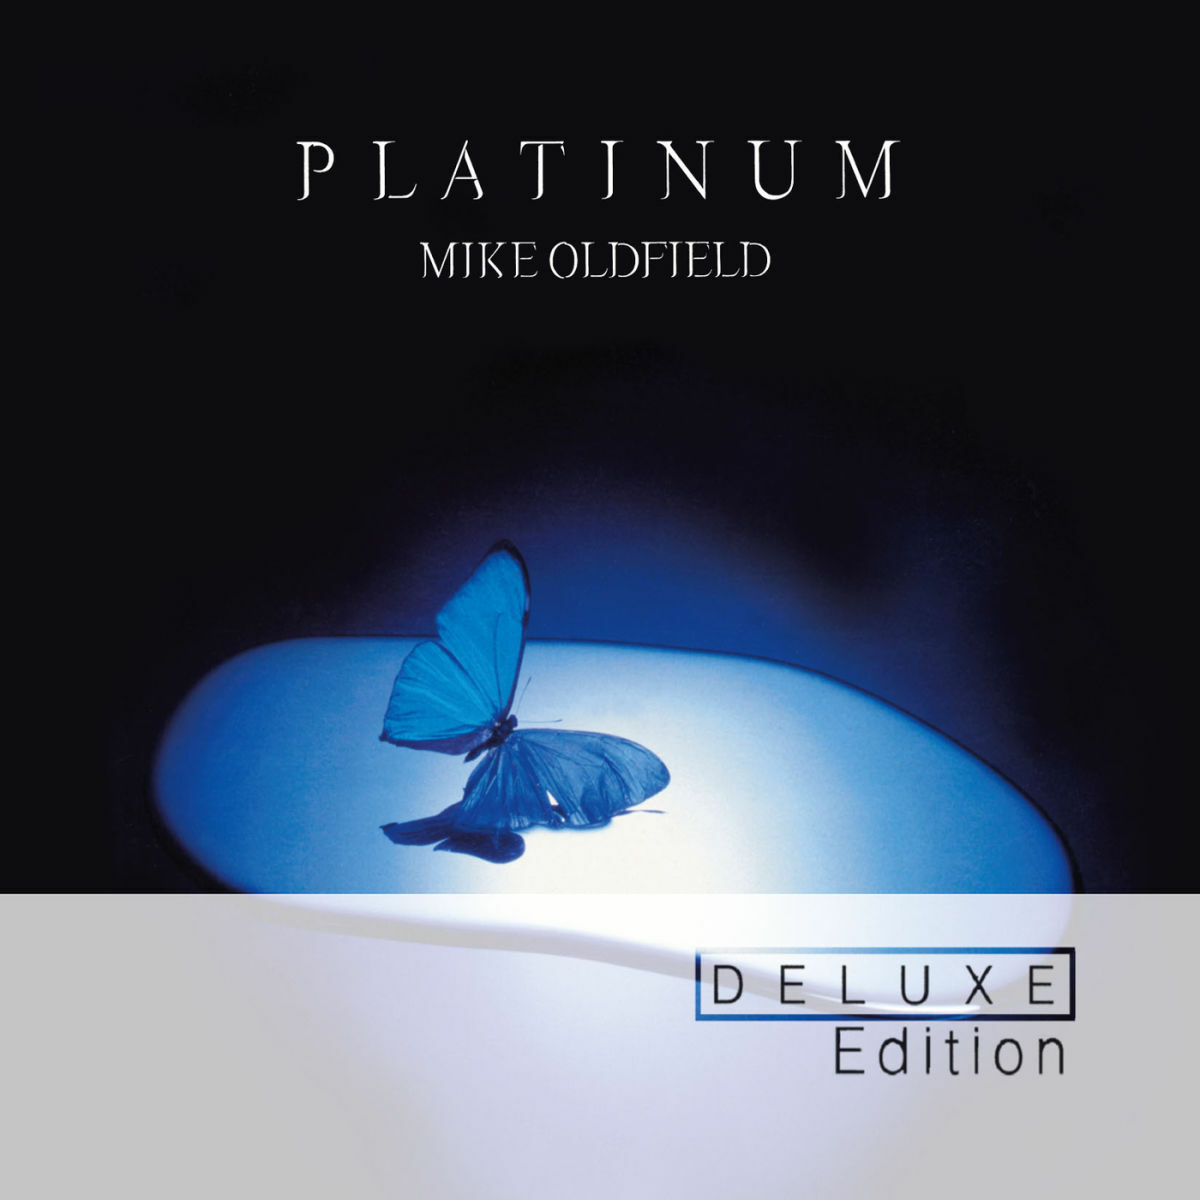 Mike Oldfield: albums, songs, playlists | Listen on Deezer